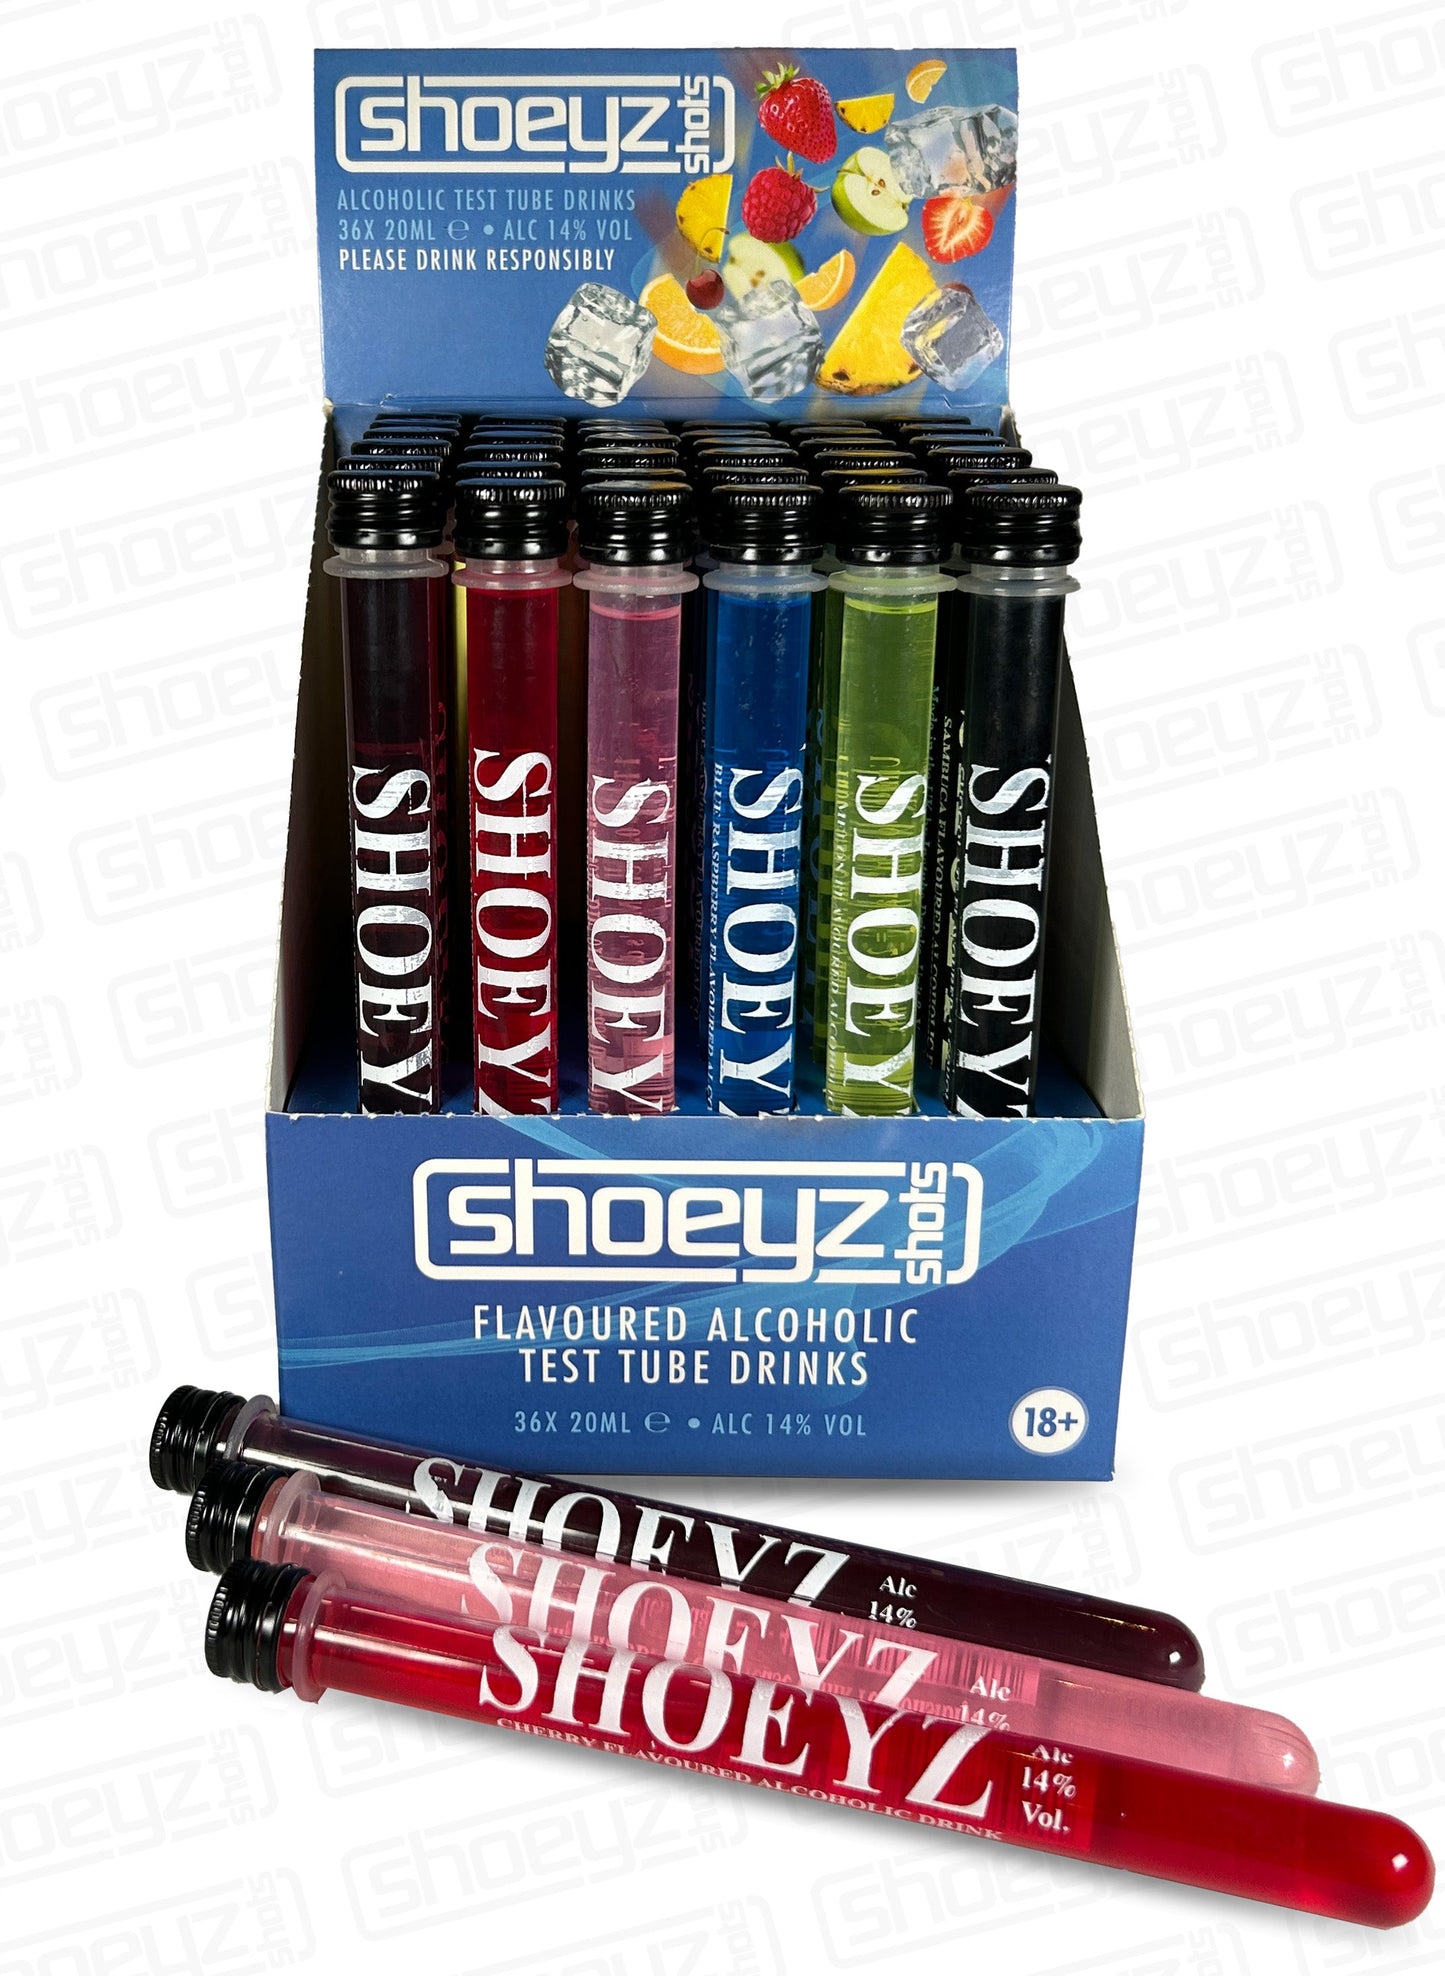 shoeyz vodka test tube shots multi flavours 3